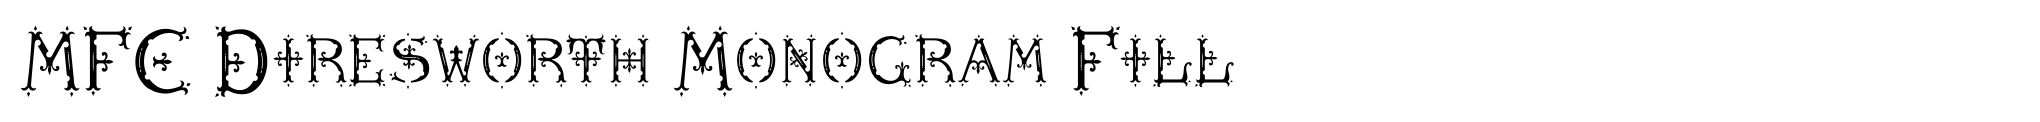 MFC Diresworth Monogram Fill image